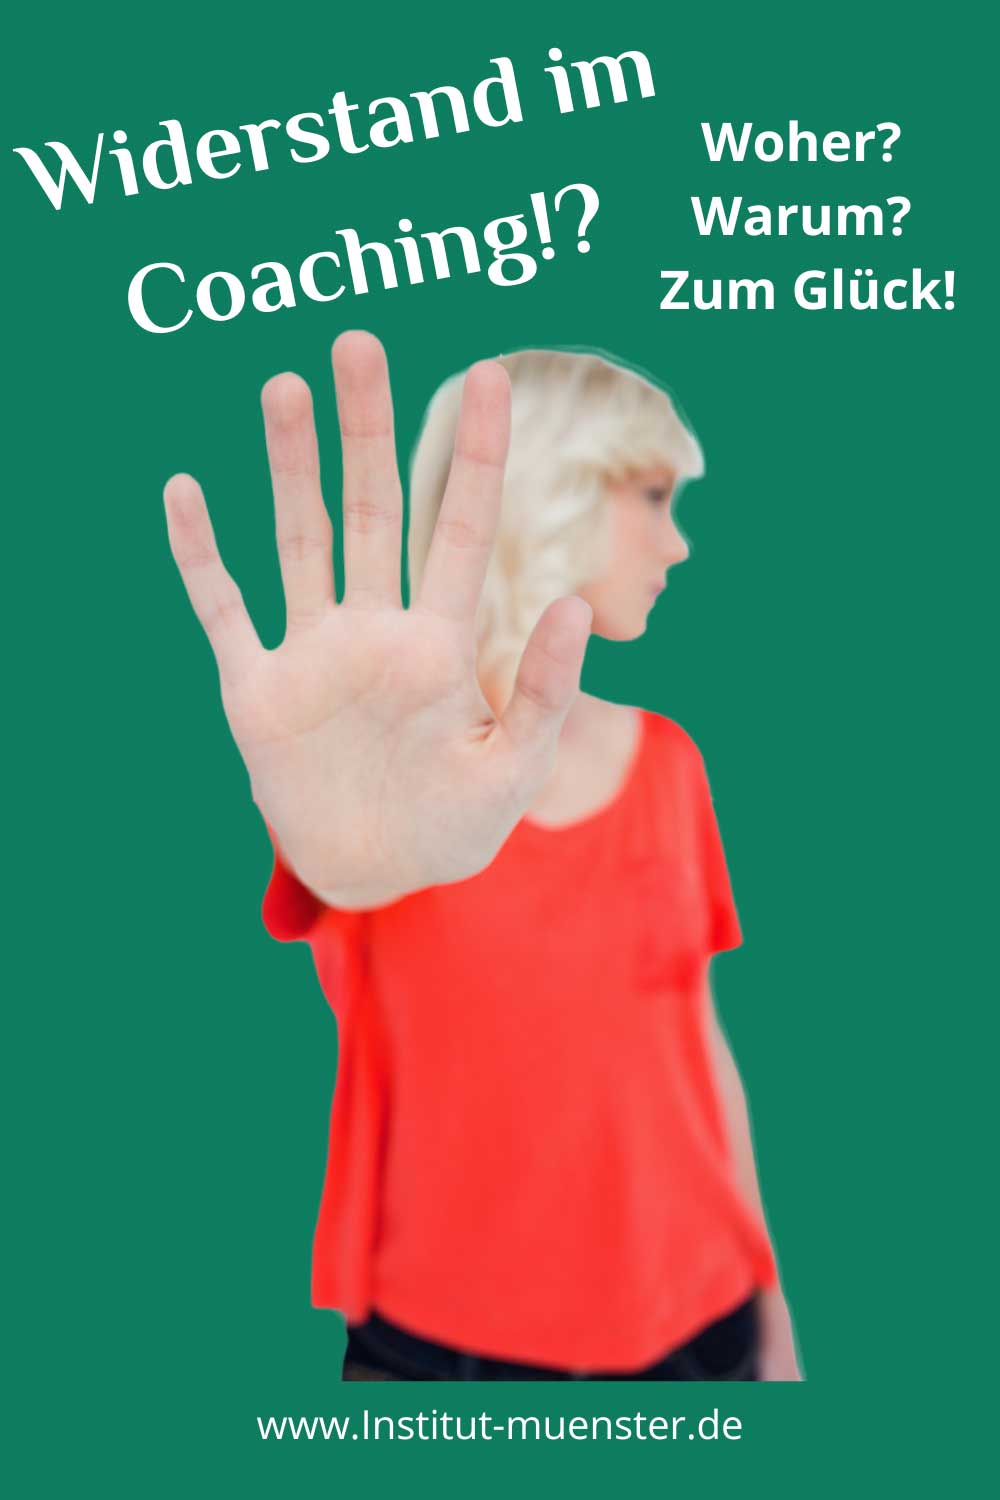 Widerstand im Coaching